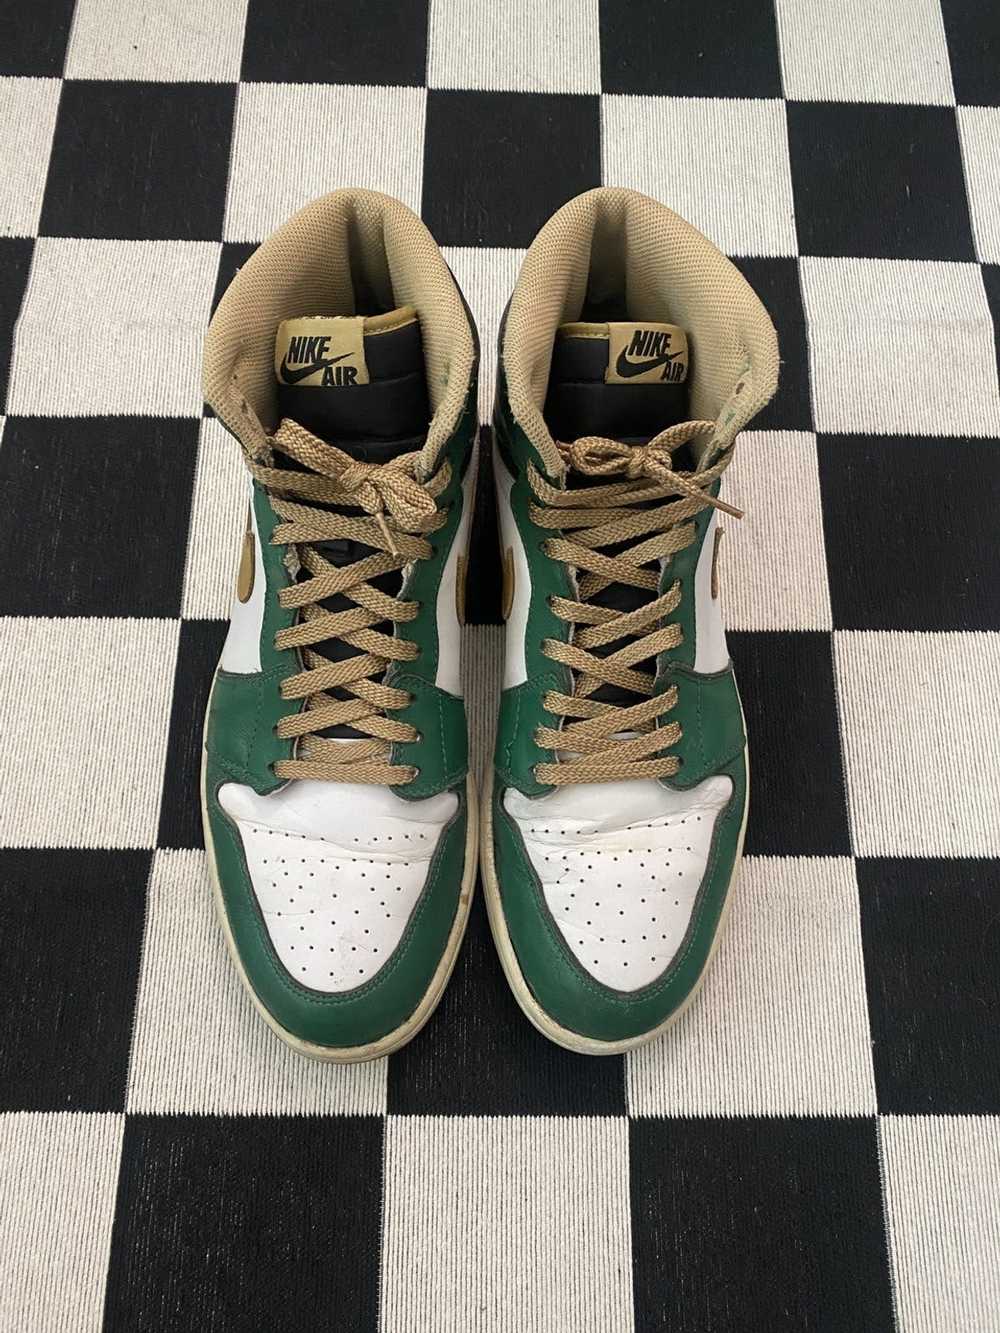 Jordan Brand Jordan 1 High “Celtics” - image 3